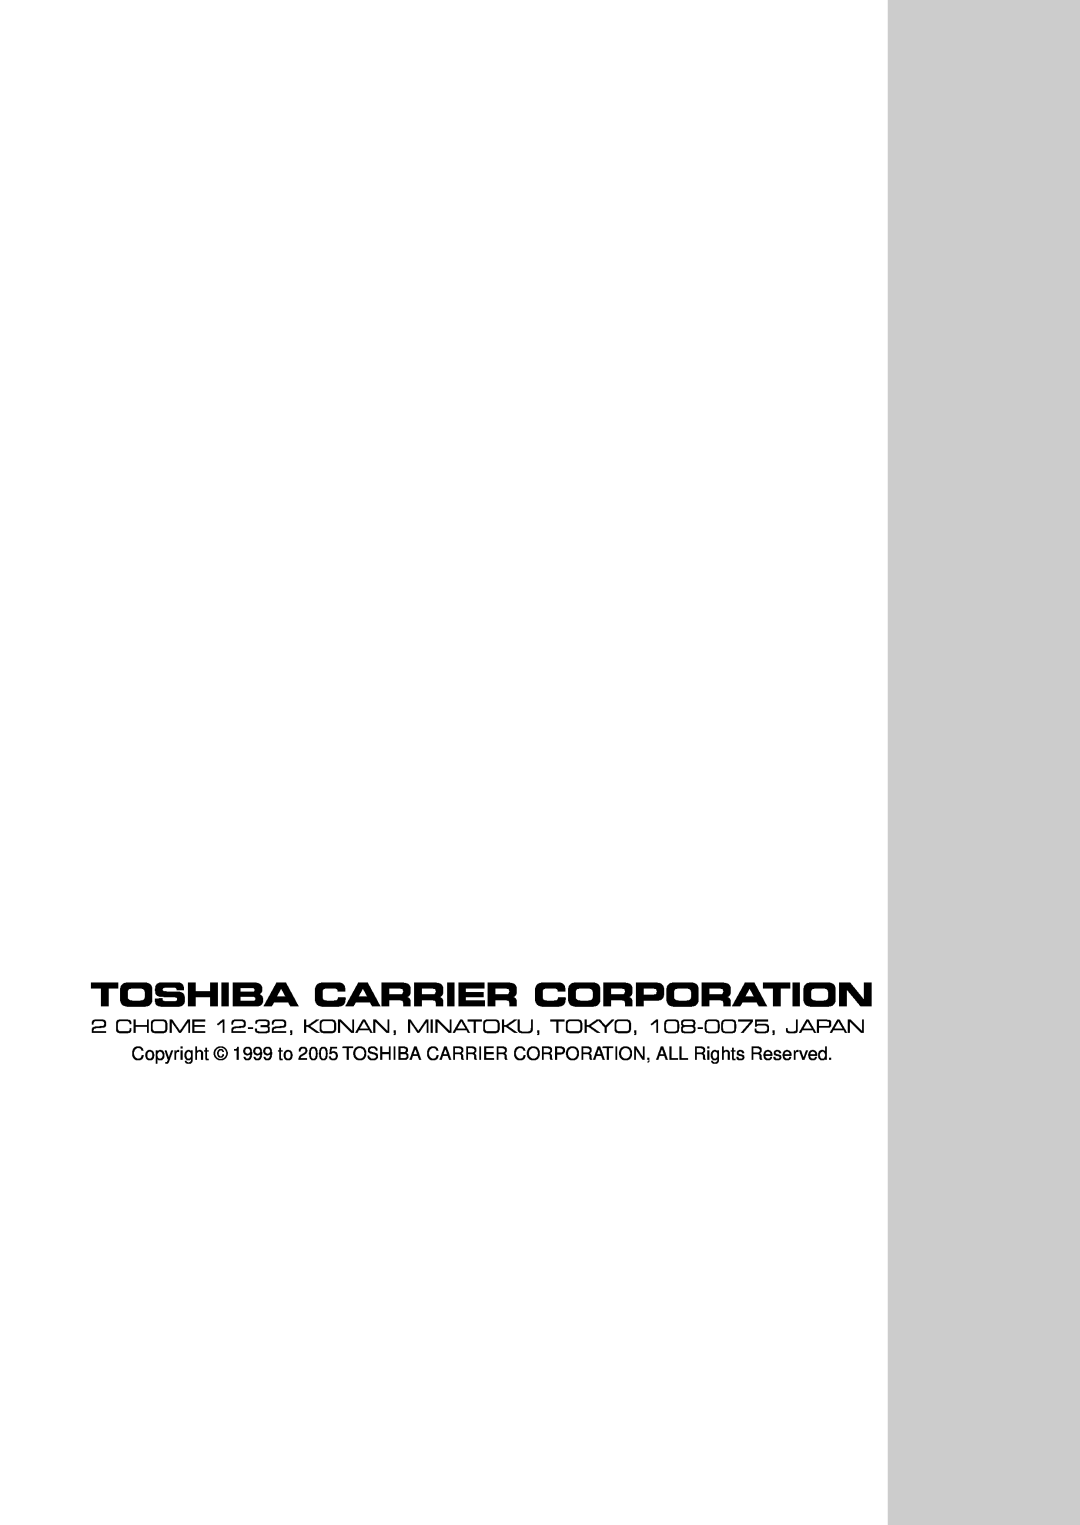 Toshiba RAV-SM1102UT-E, RAV-SM1402UT-E, RAV-SM802UT-E, RAV-SM562UT-E service manual Toshiba Carrier Corporation 